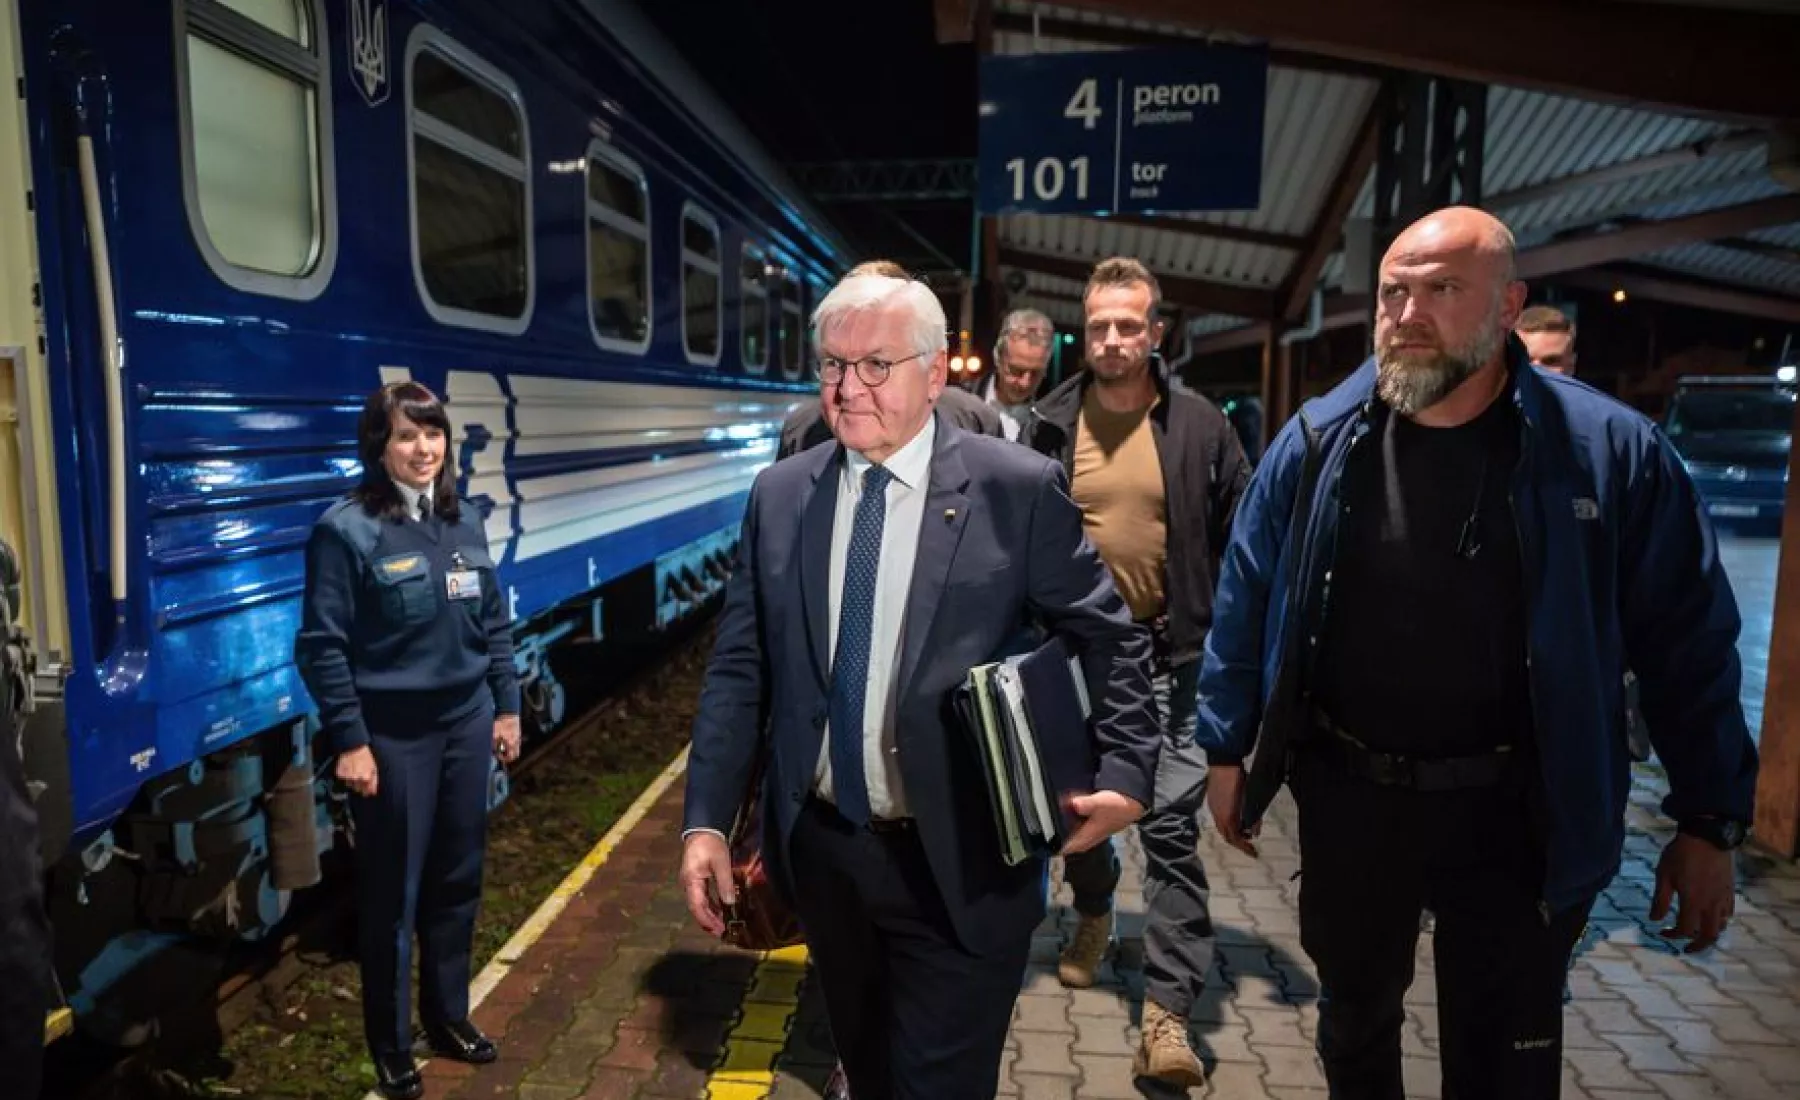 Bundespräsident Frank-Walter Steinmeier (l) geht am Bahnhof zum Zug, um nach Kiew zu fahren